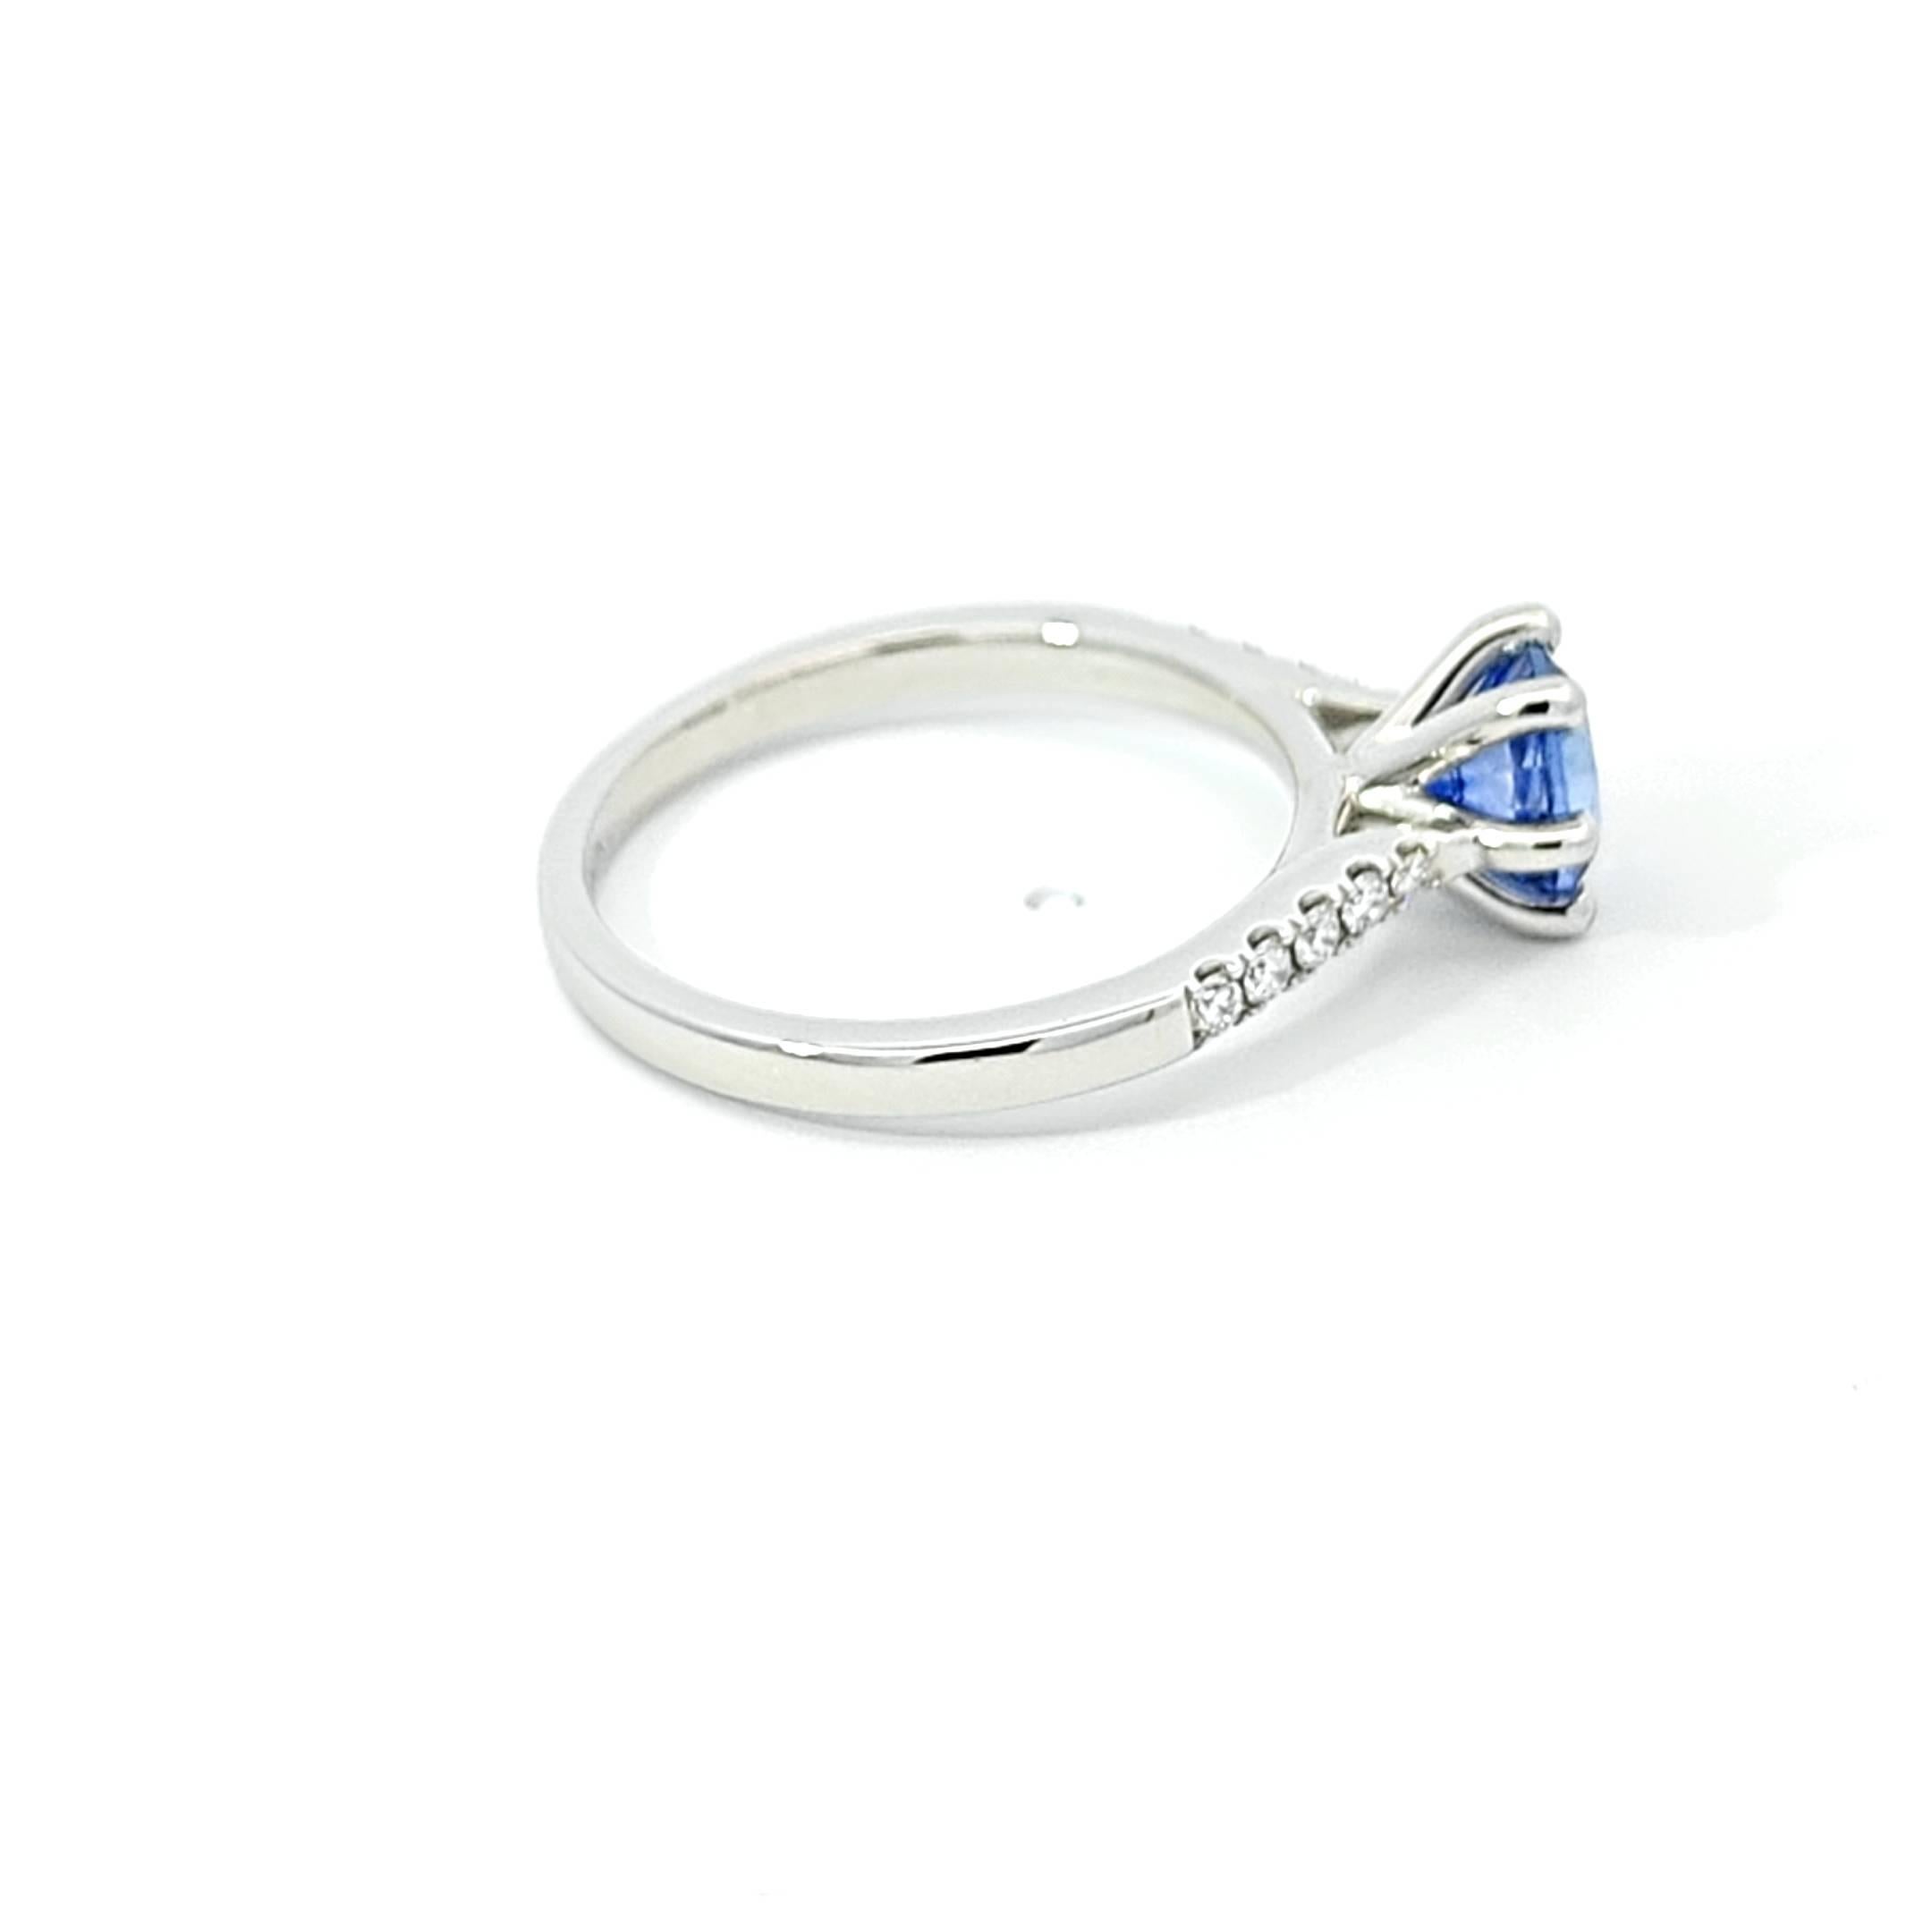 Women's Stunning PT950 Ring with Ceylon Blue Sapphire and White Diamonds. Certified